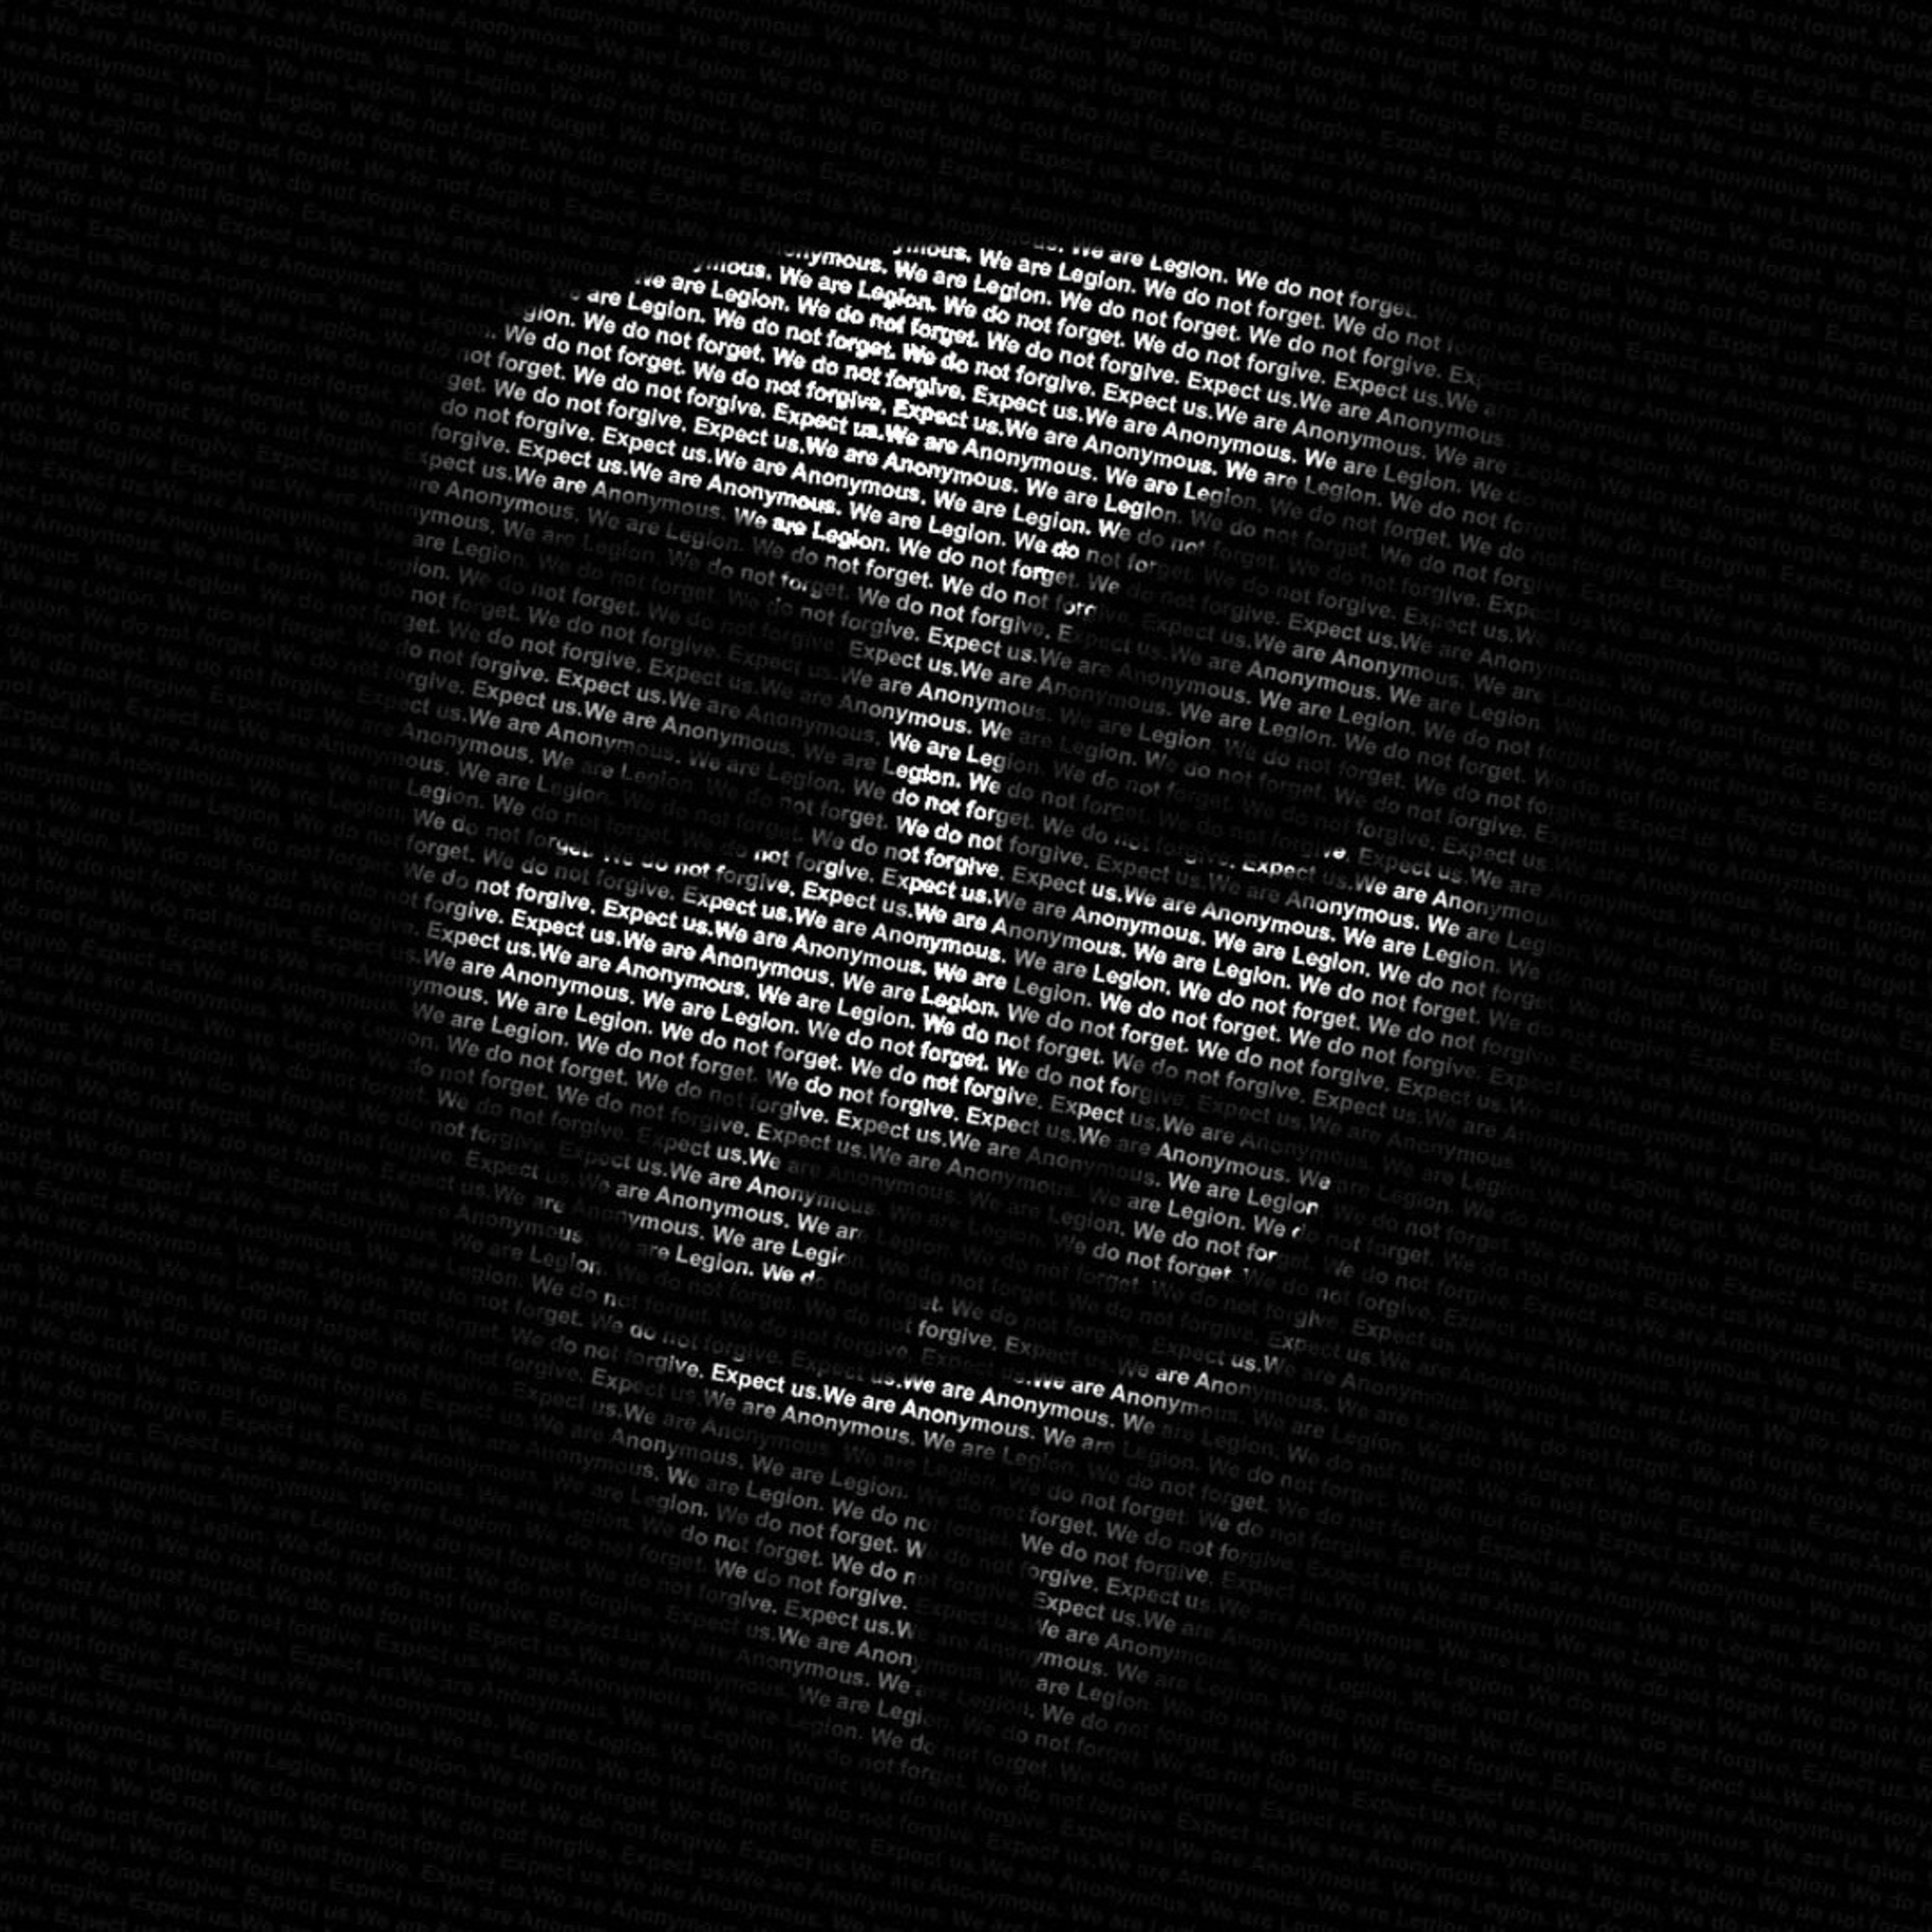 Anonymus Hacker In 2048x2048 Resolution. anonymus-hacker.jpg. 